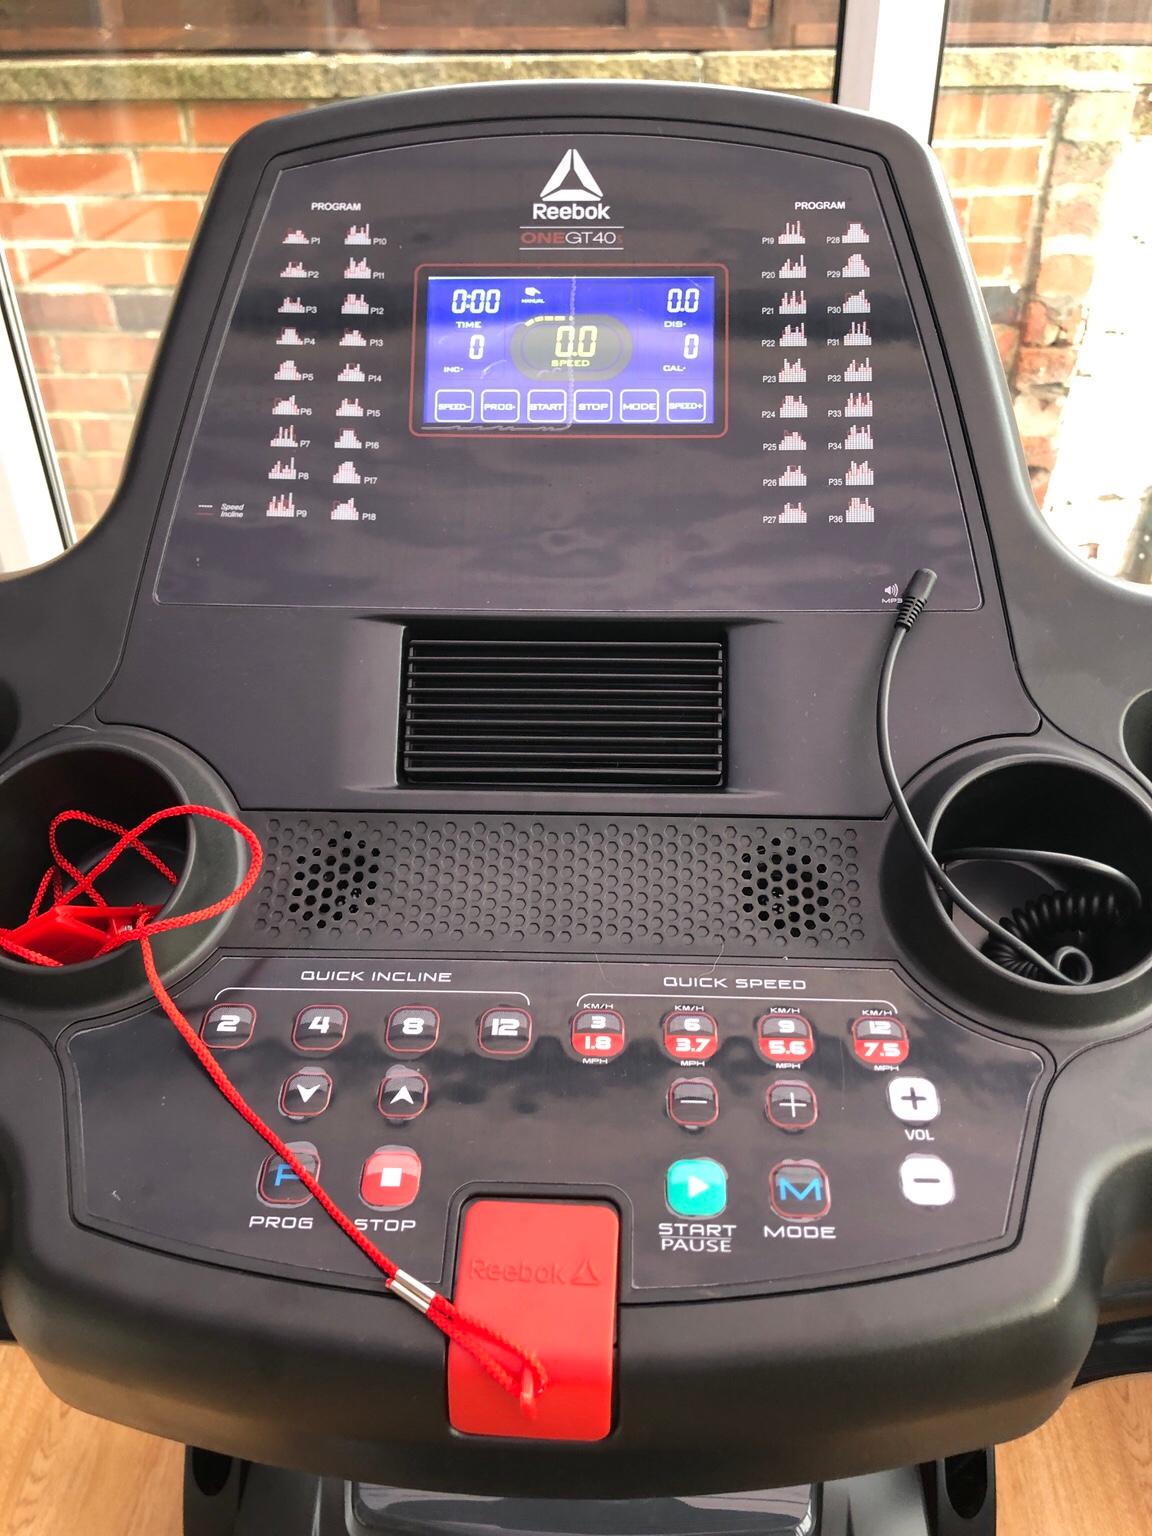 reebok one gt40s treadmill for sale